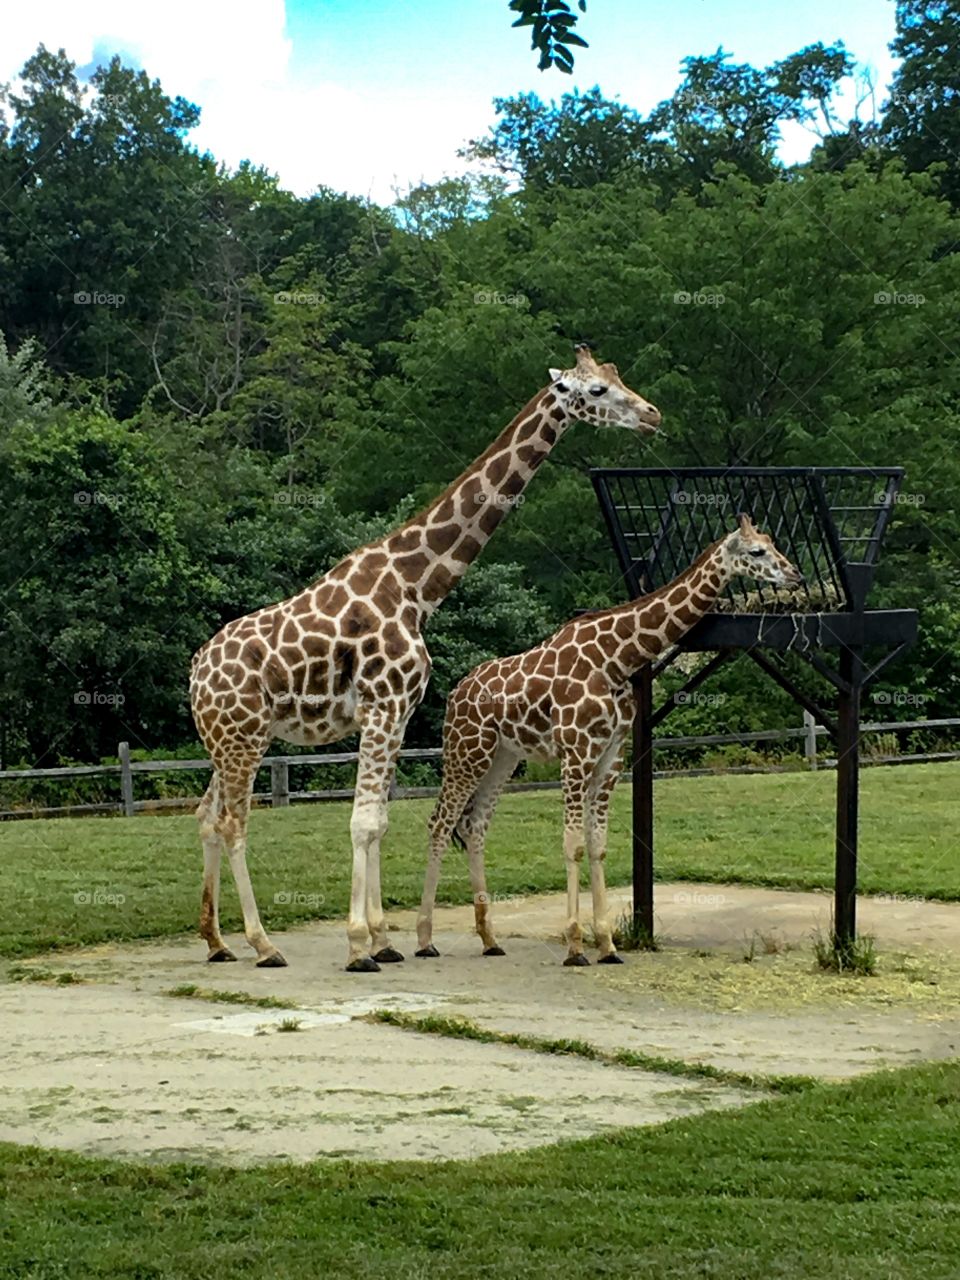 Mama giraffe and baby giraffe 